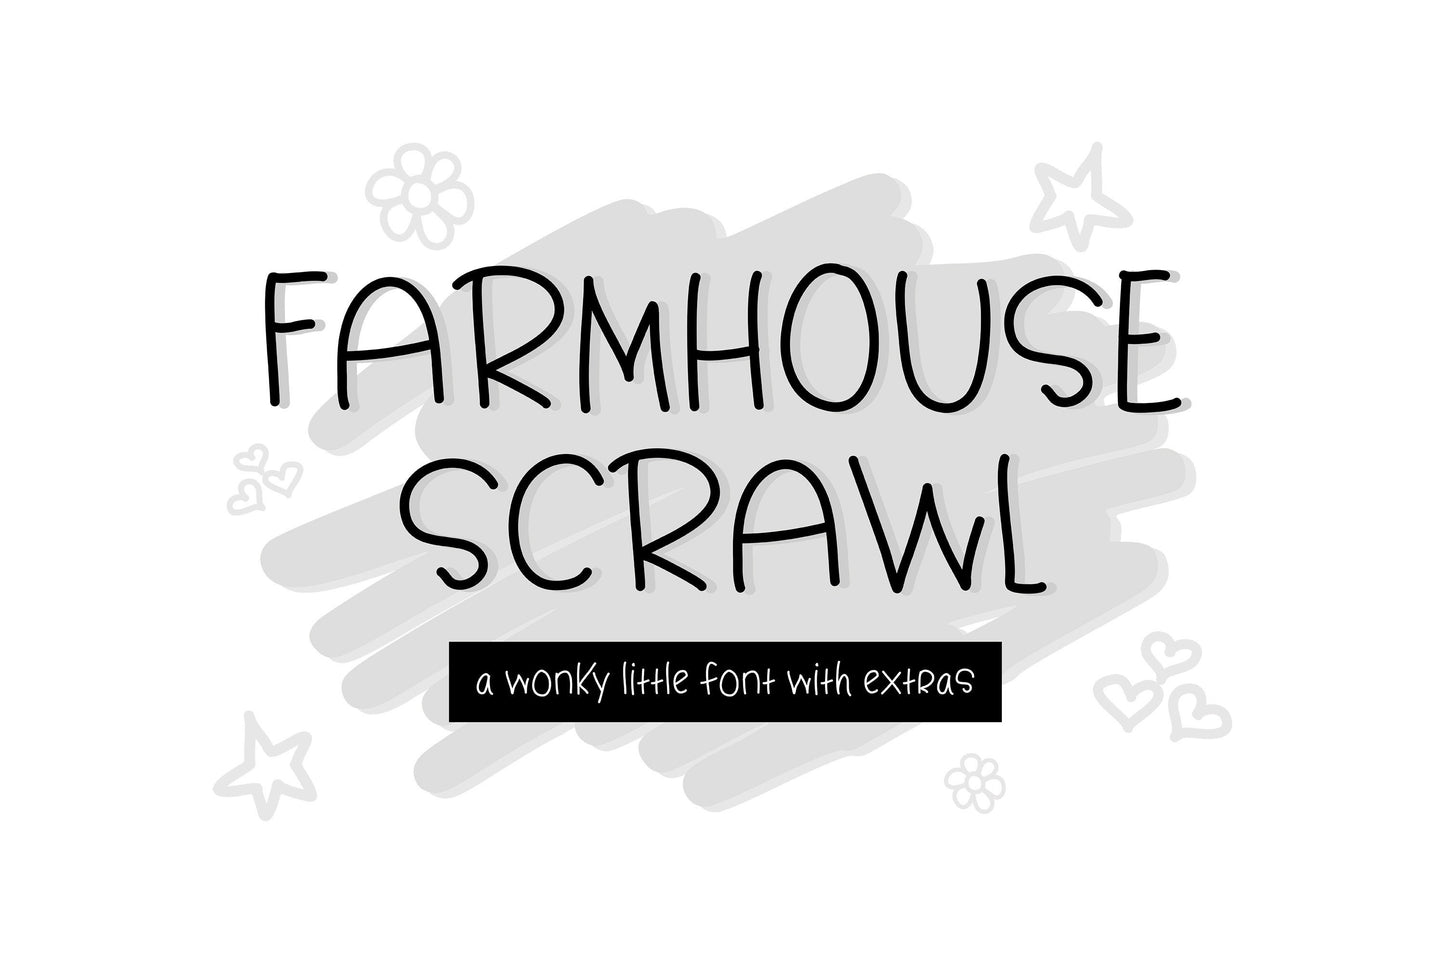 Farmhouse Scrawl Font Wonky Farmhouse Font Farmhouse Typography Rustic Font Rustic Typography Quriky Font For Farmhouse Projects San Serif